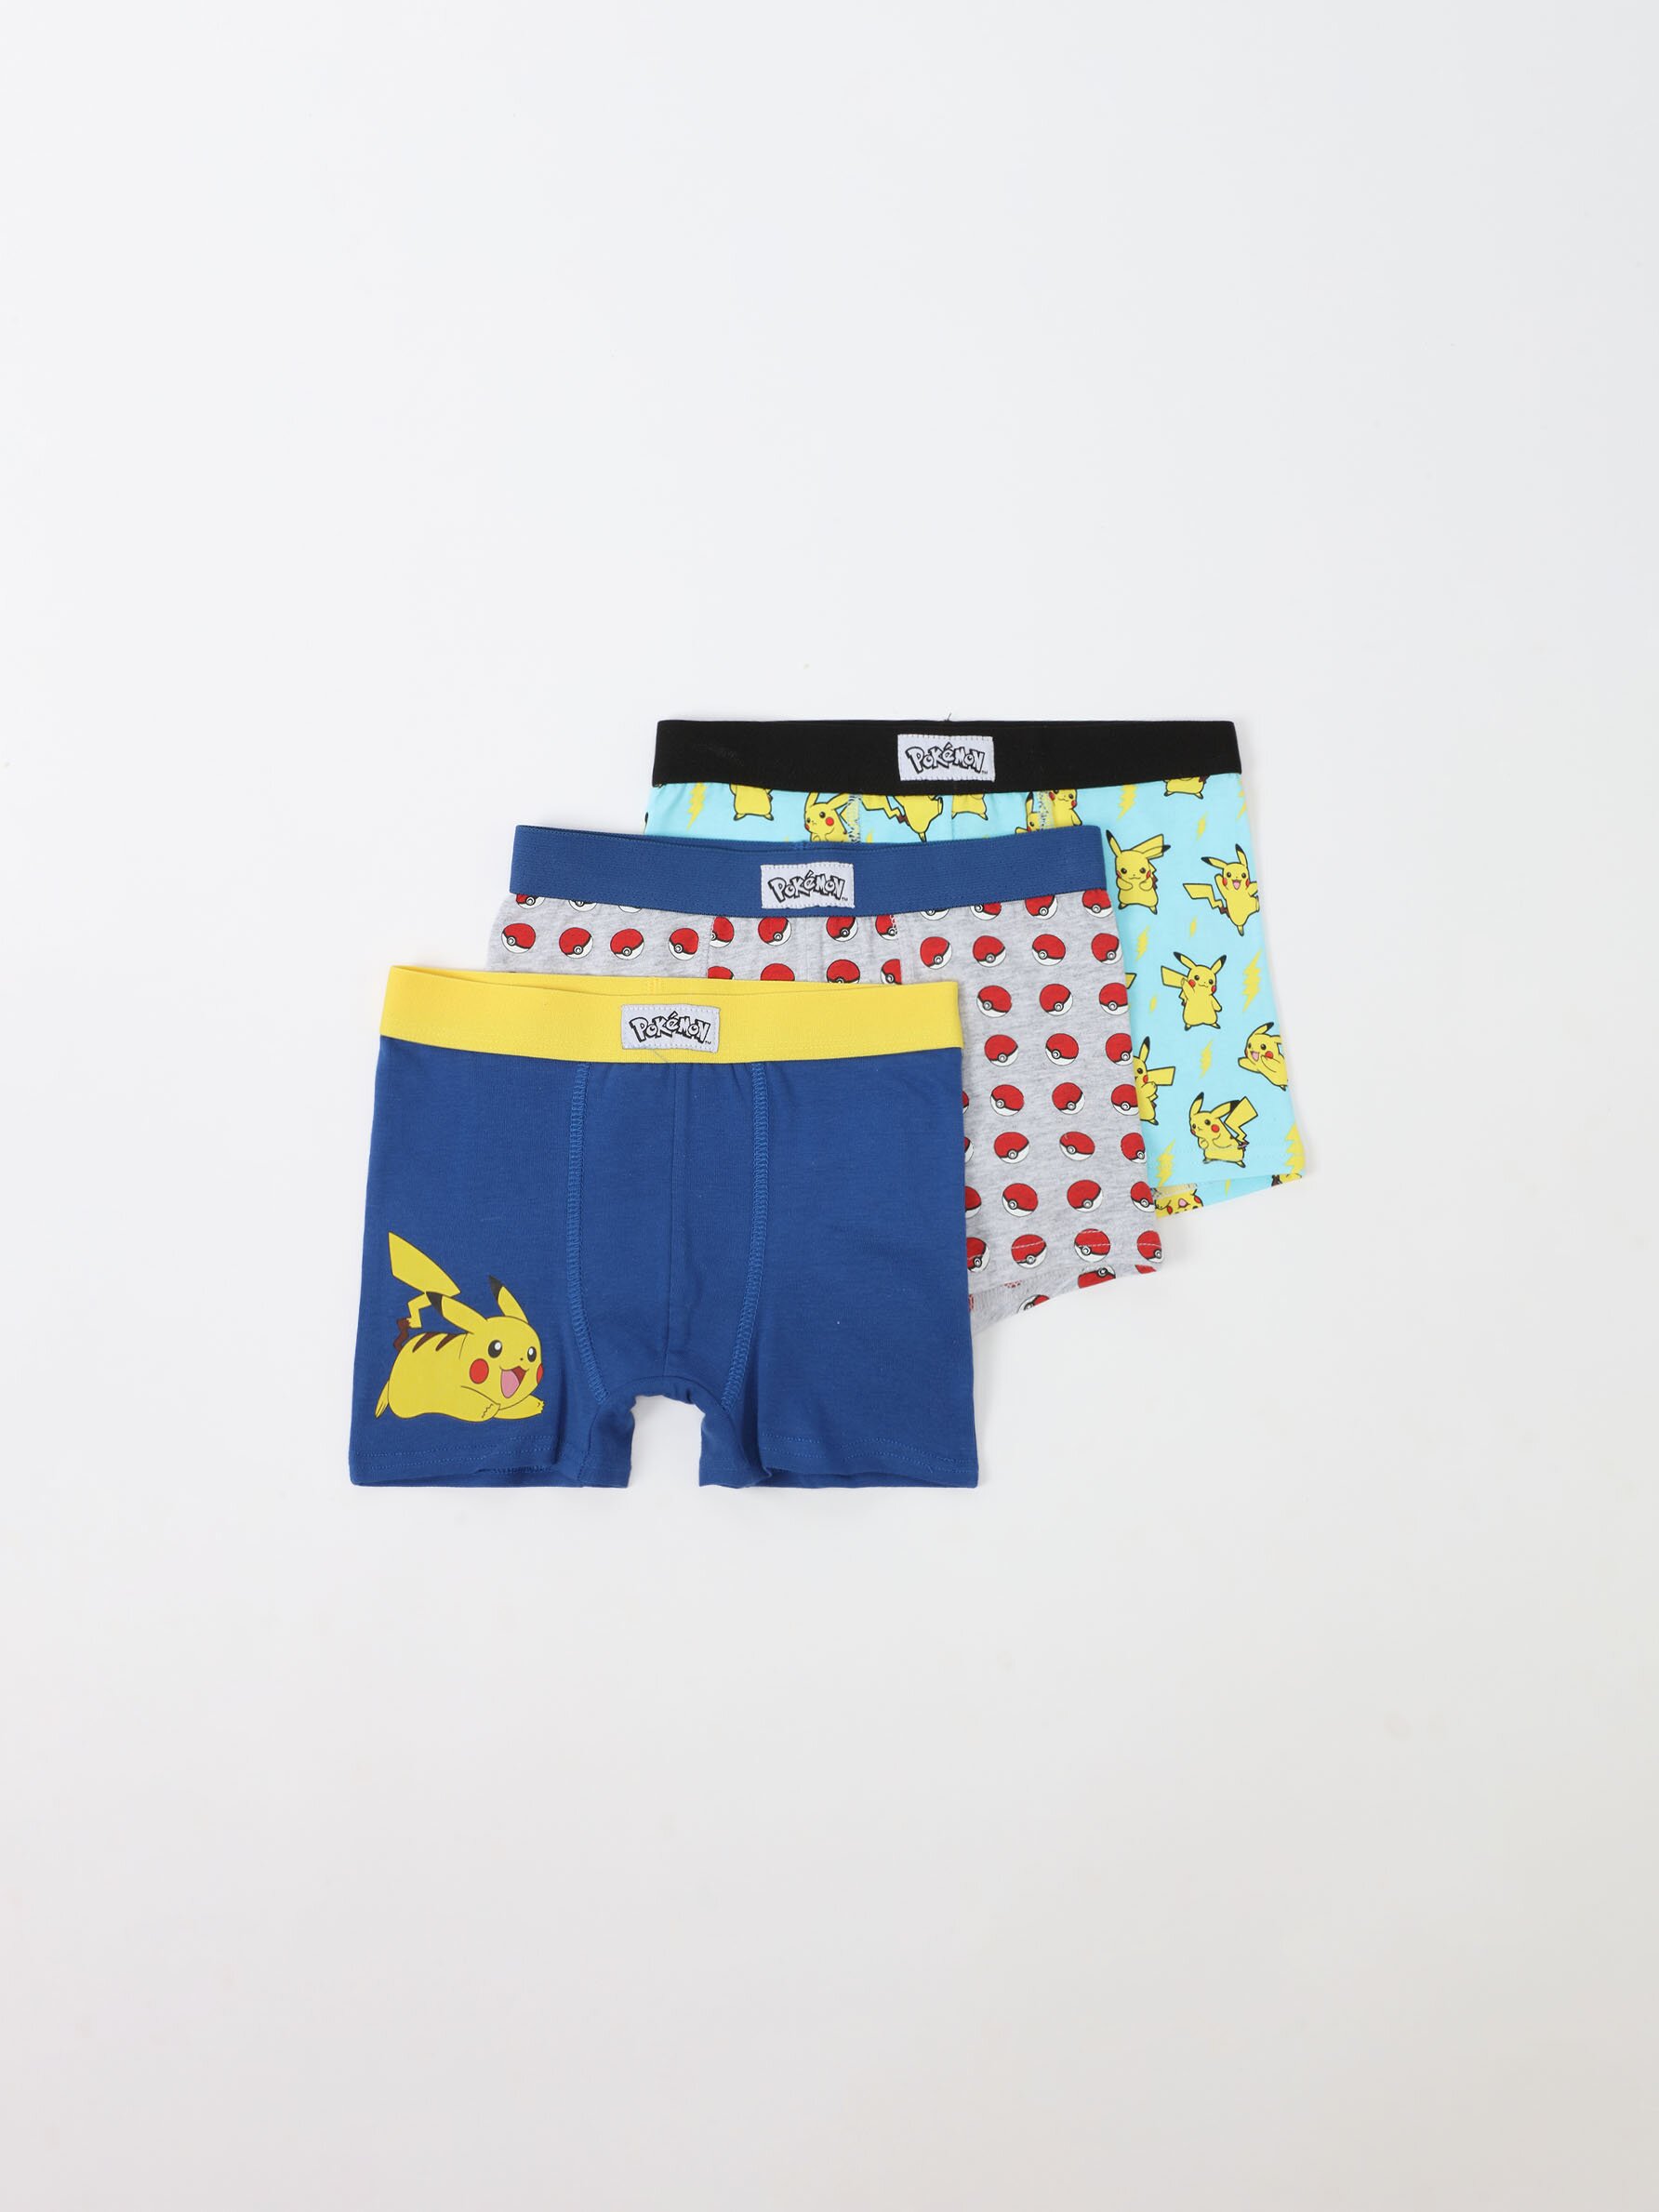 Pokémon Boys Underwear Pack of 4 Multicolor 12 